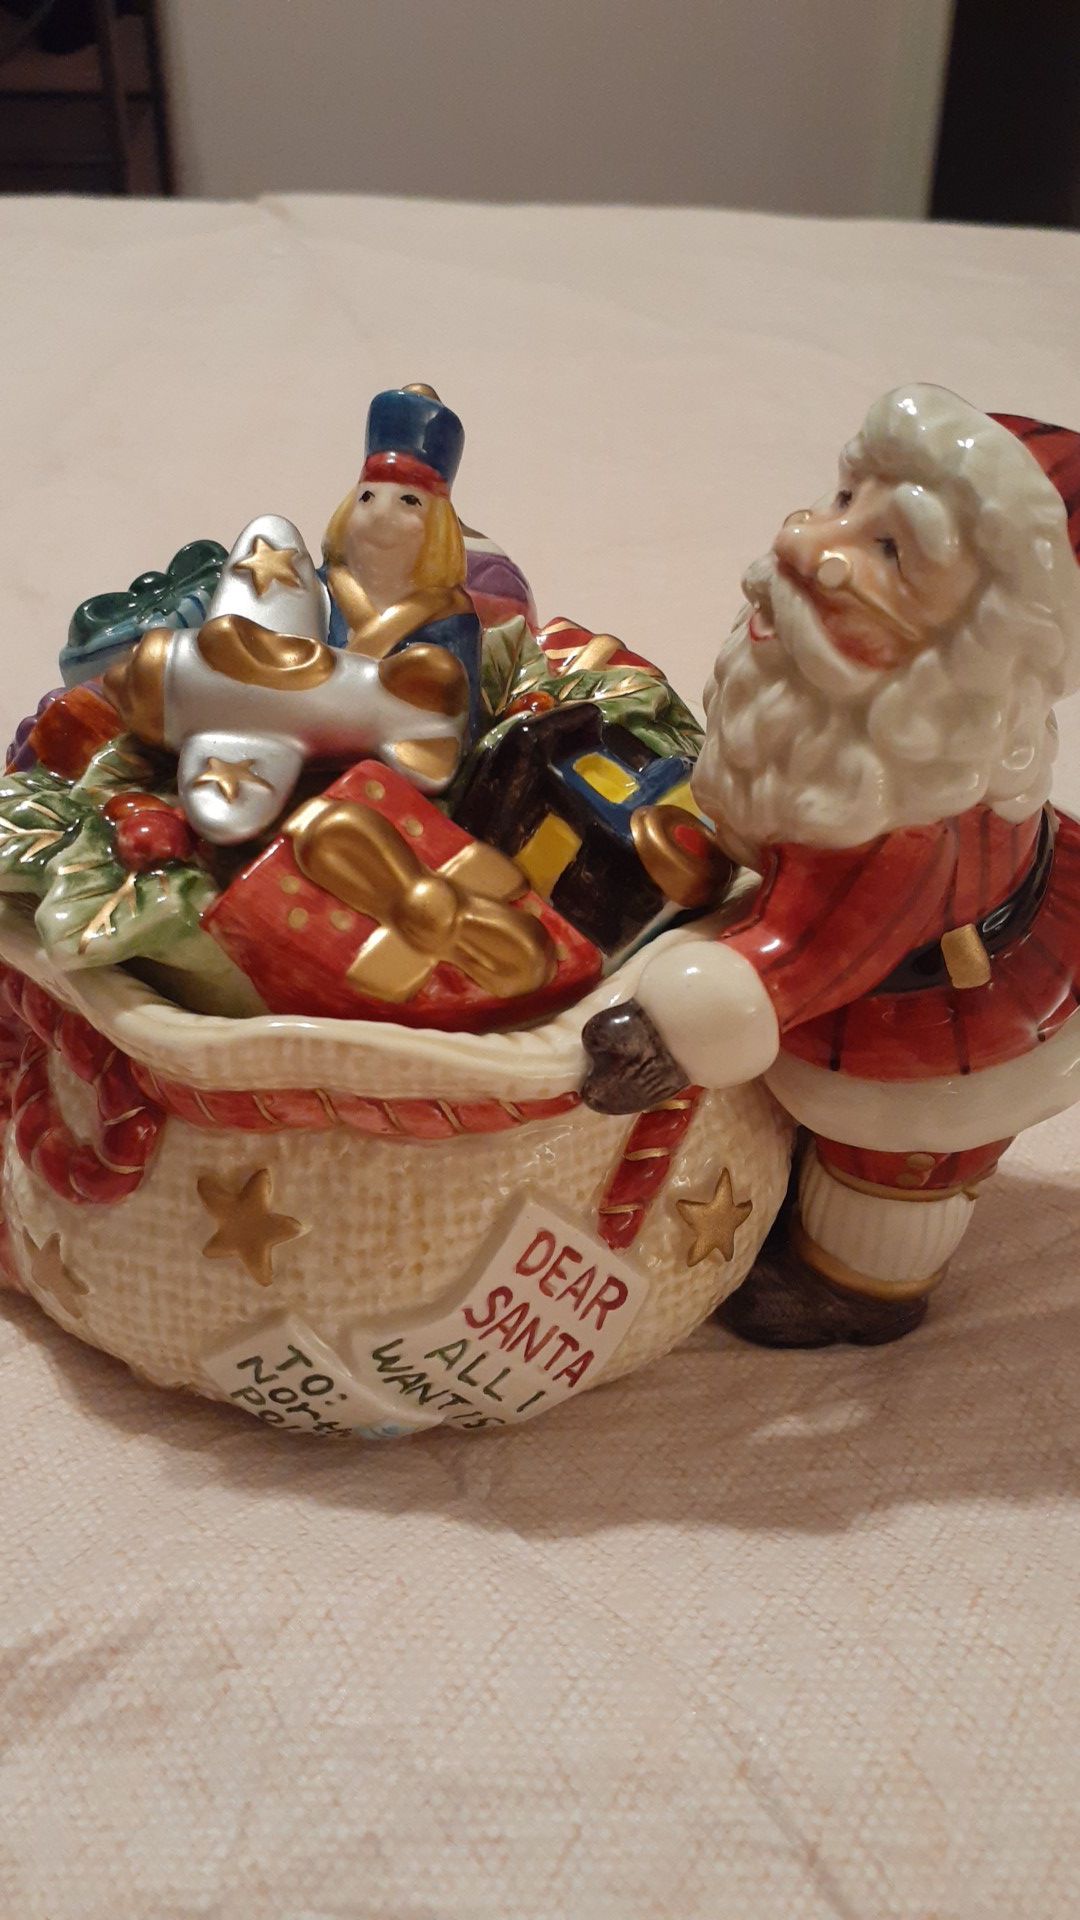 Santa's Toy Bag